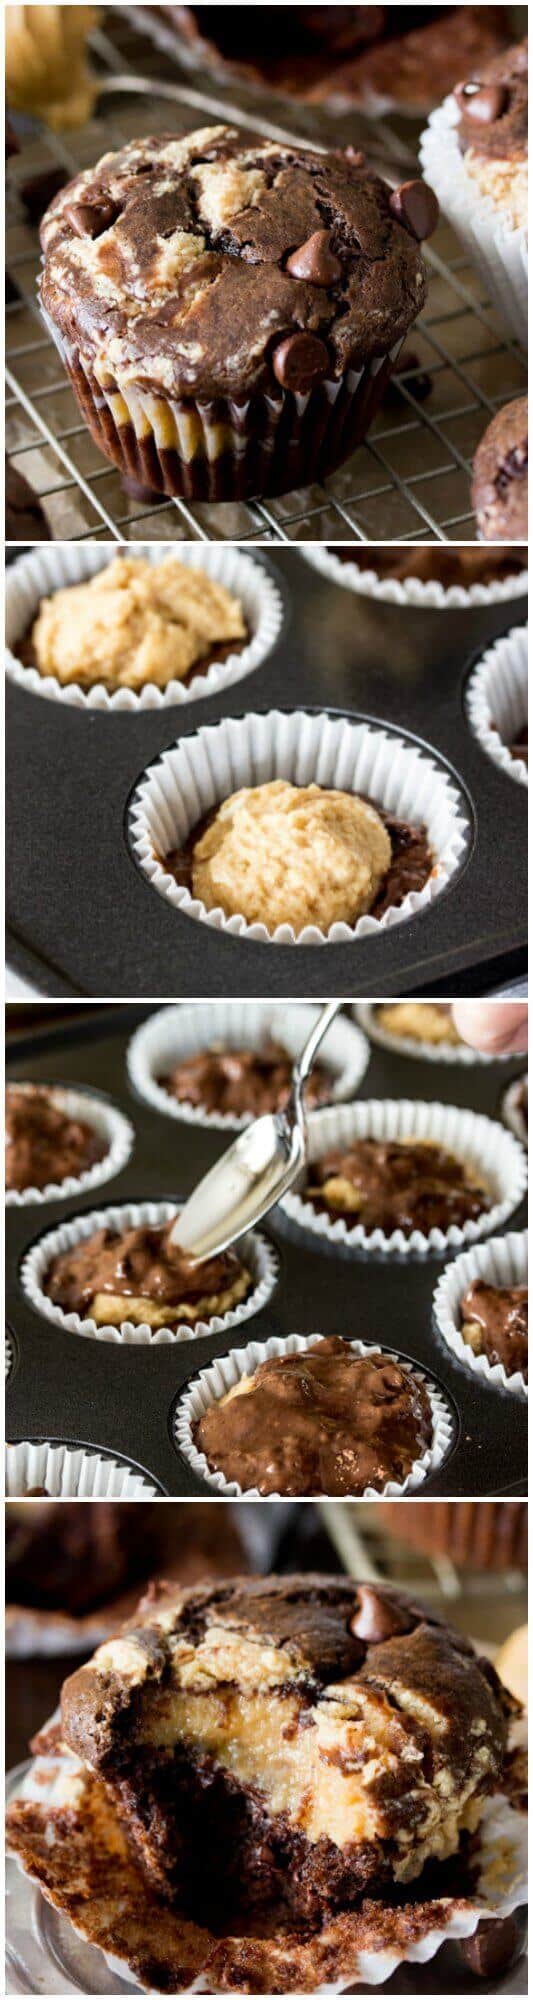 Peanut Butter Stuffed Chocolate Muffins